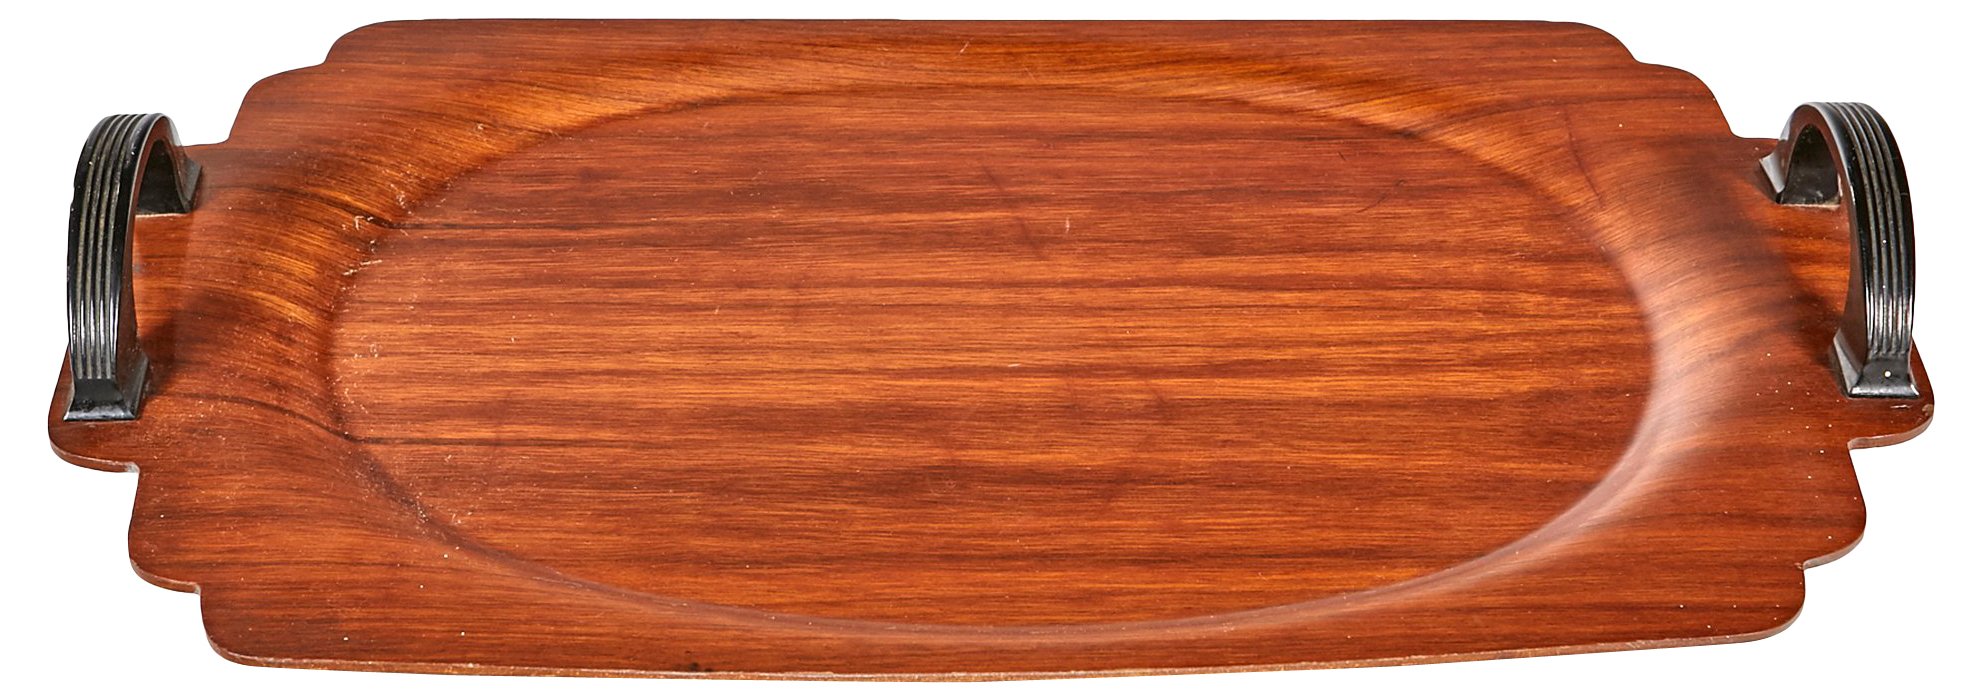 Art Deco Walnut Wood Handled Tray~P77508504